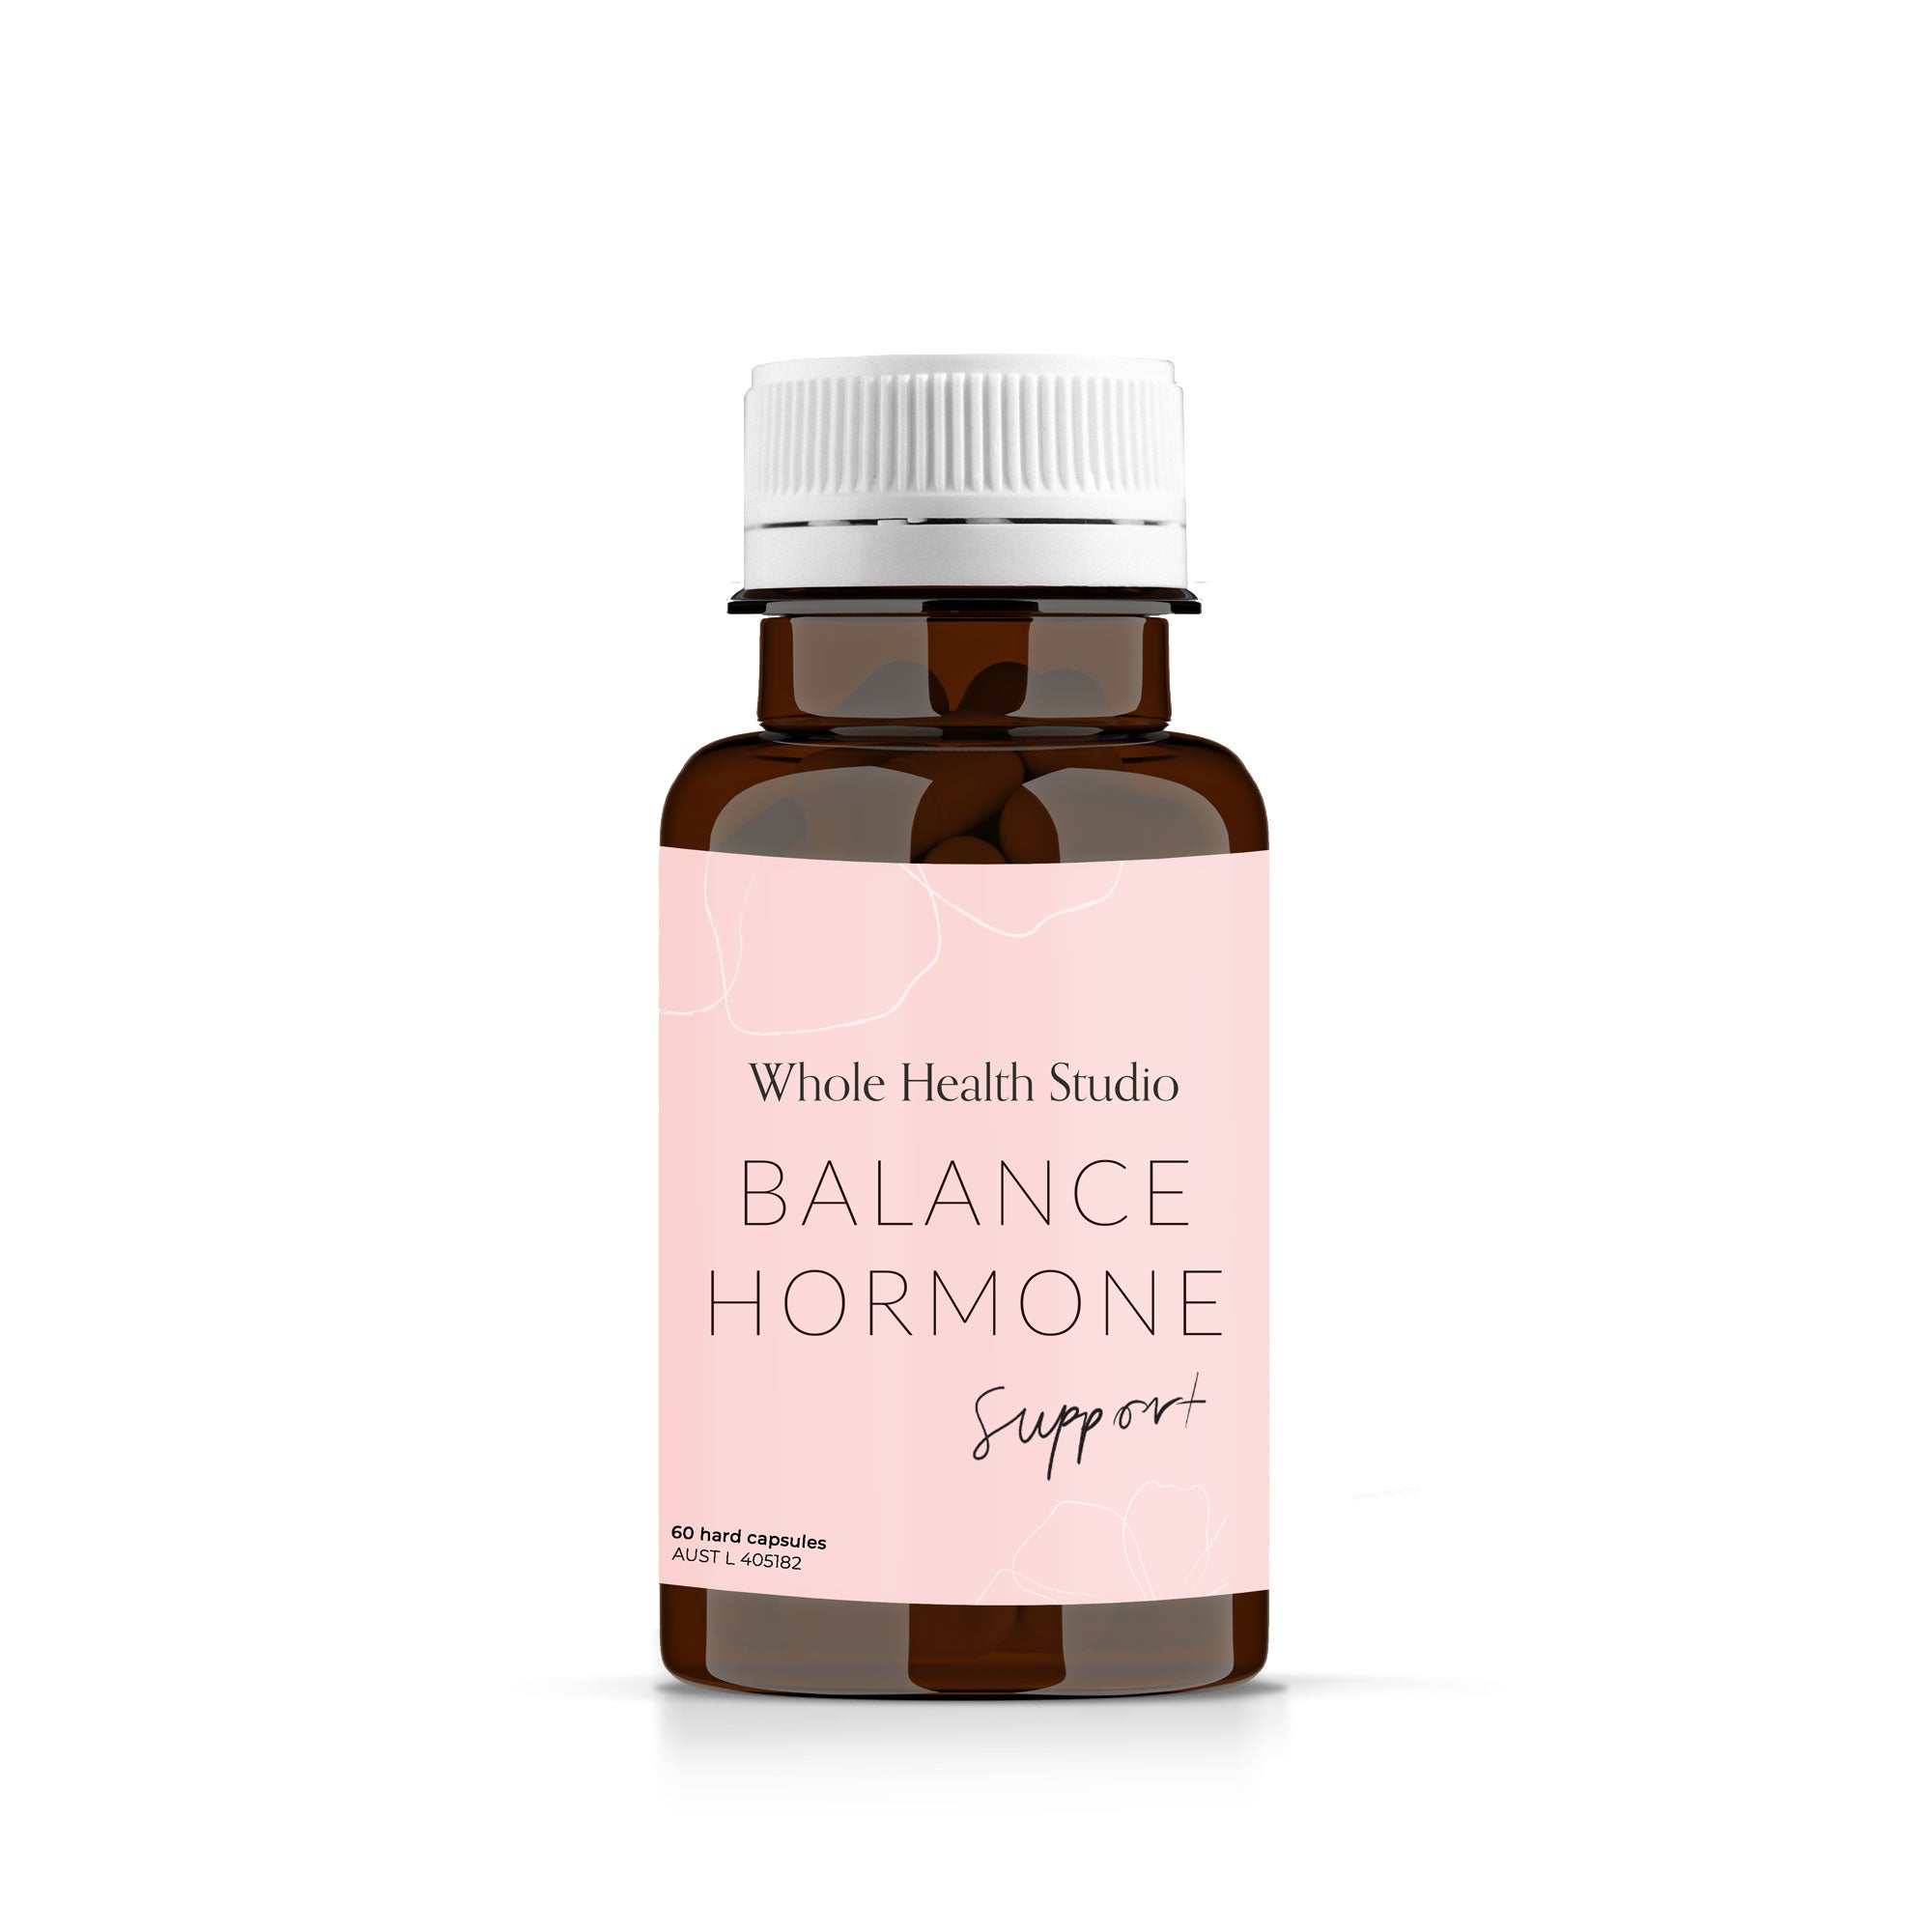 Whole Health Studio Balance Hormone